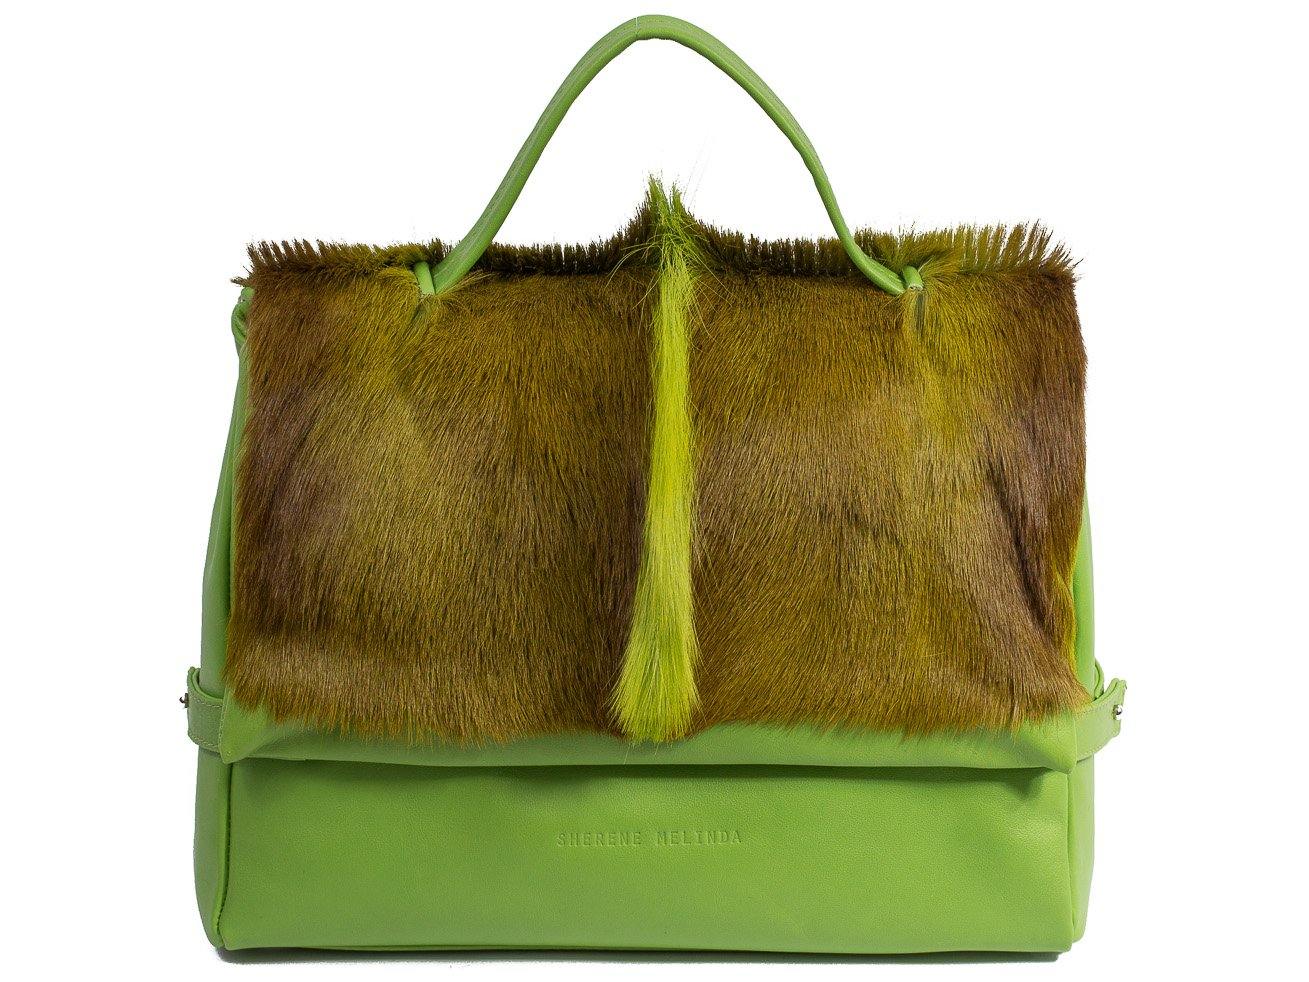 sherene melinda springbok hair-on-hide lime green leather smith tote bag Fan front